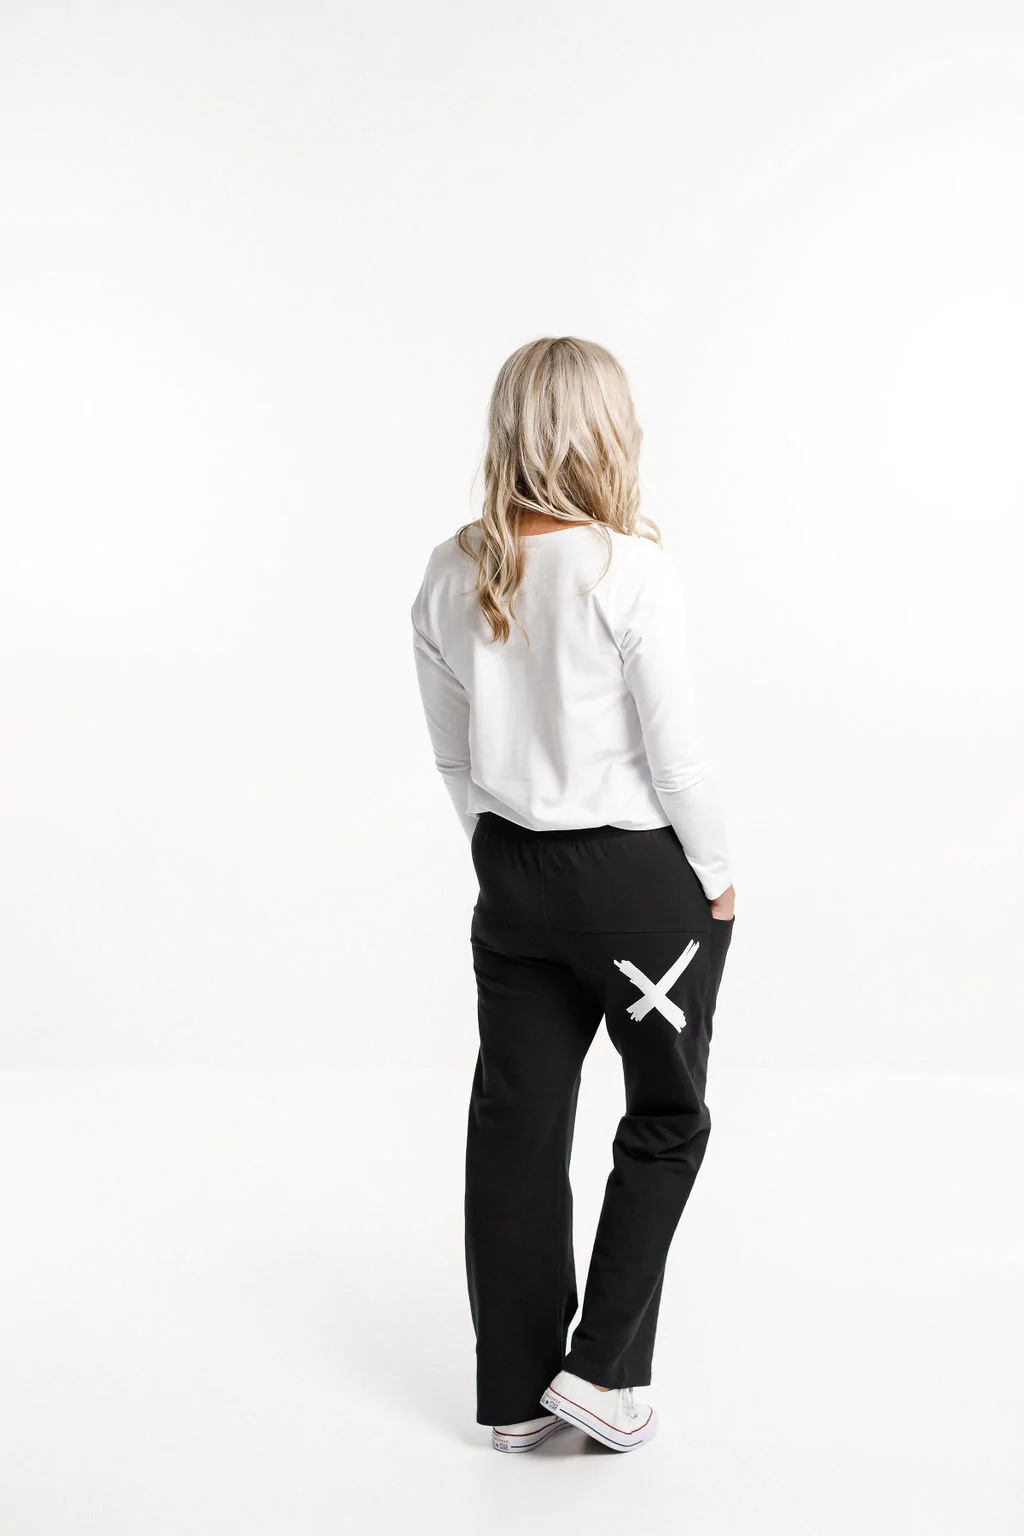 Side Line Pant - Black - Pants - Full Length - Women's Clothing - Storm